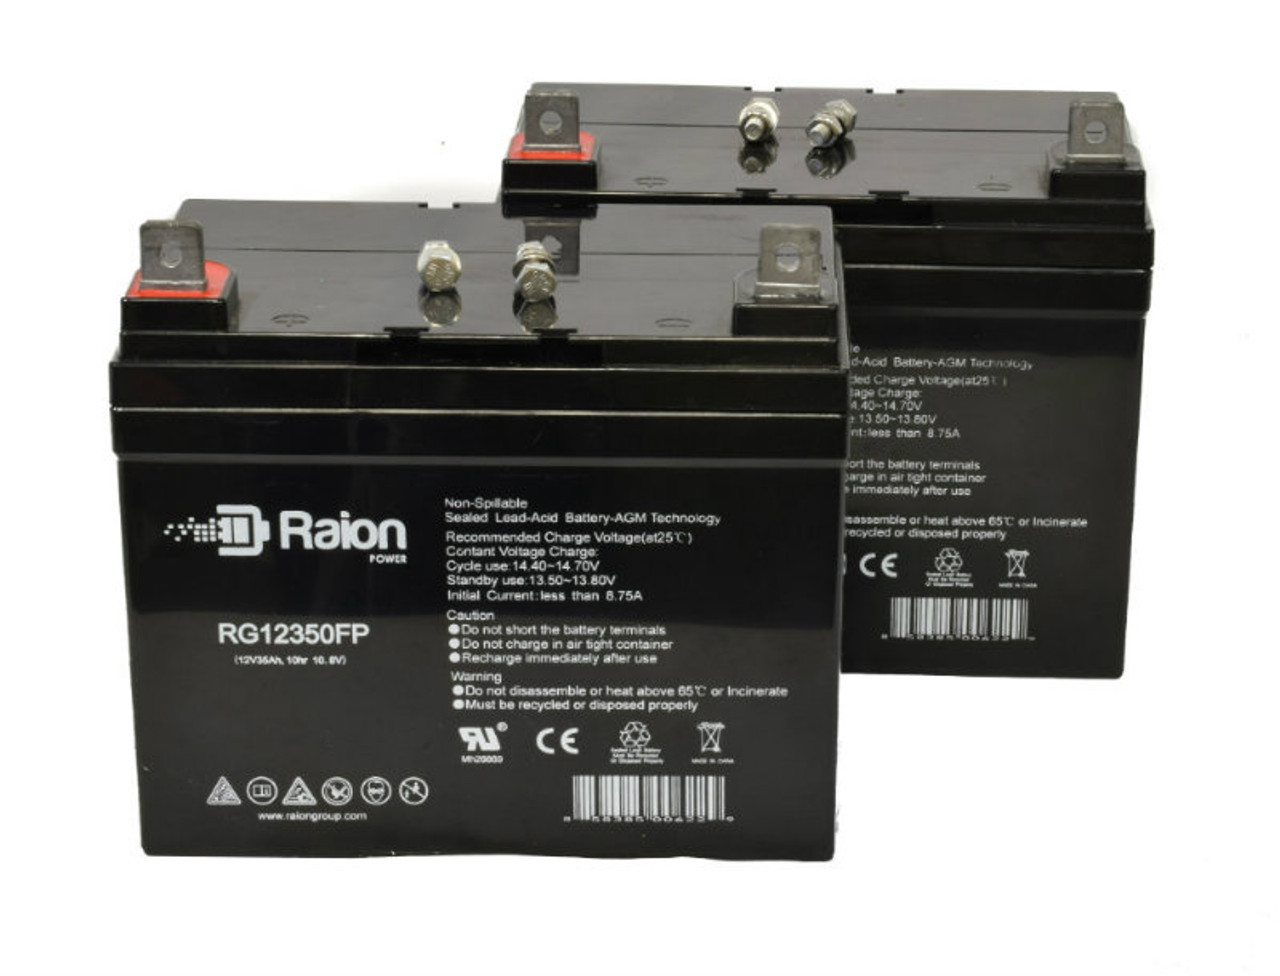 Raion Power Replacement 12V 35Ah Lawn Mower Battery for Ingersol Equipment 5320V - 2 Pack